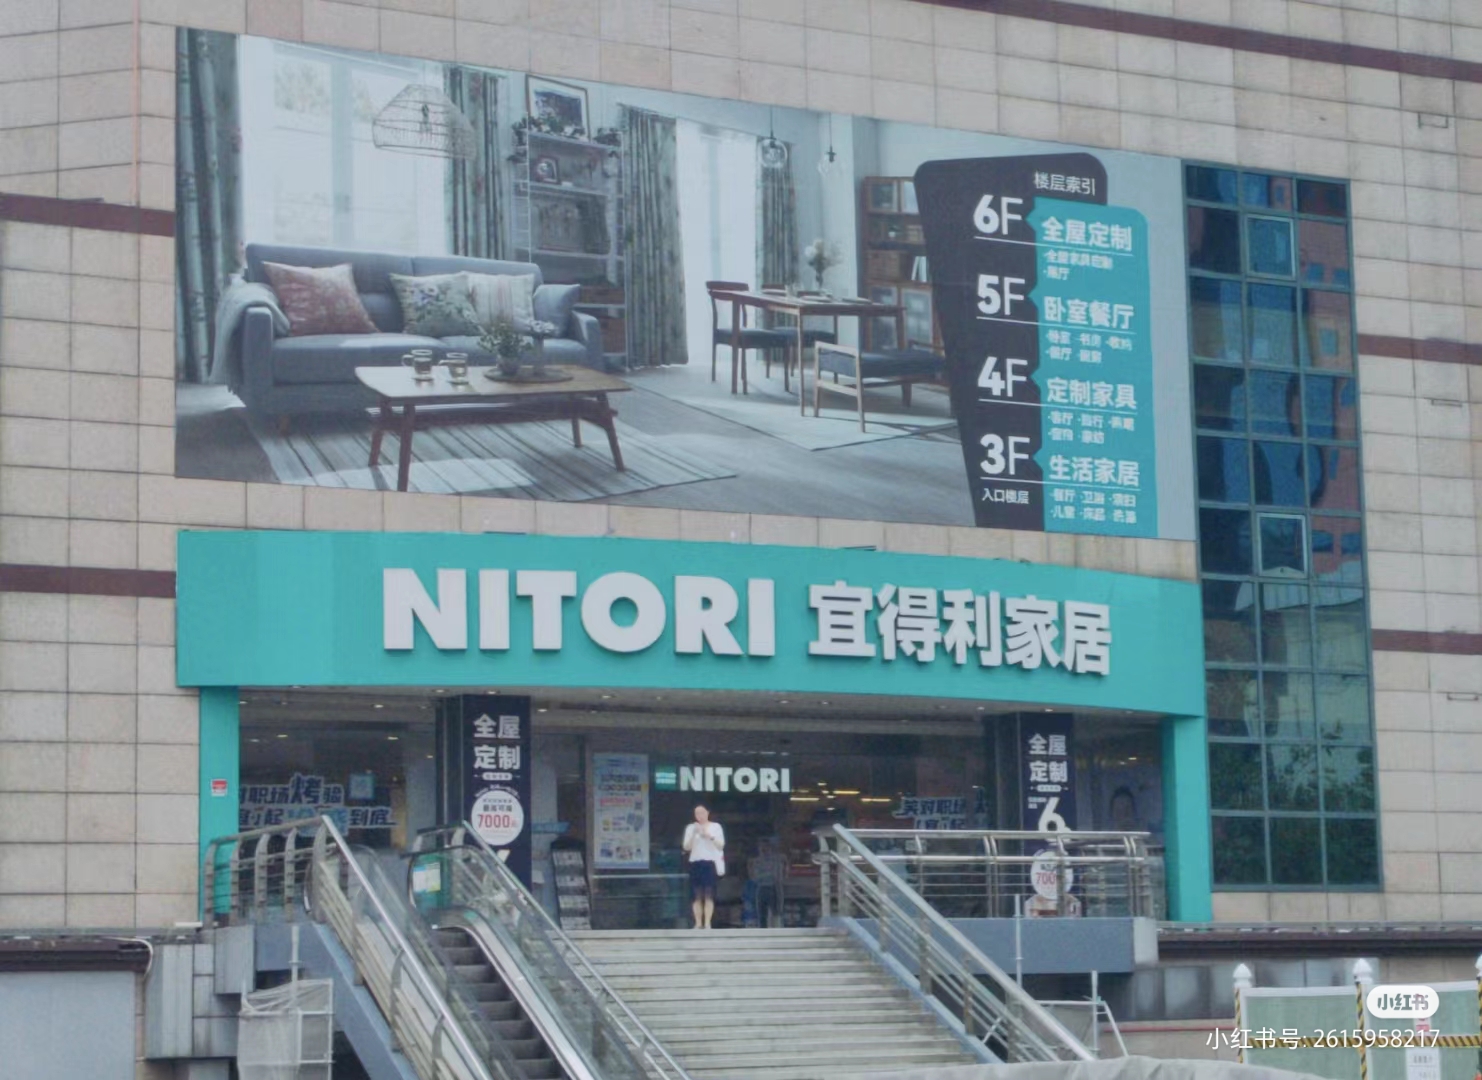 Nitori in China: shopping center